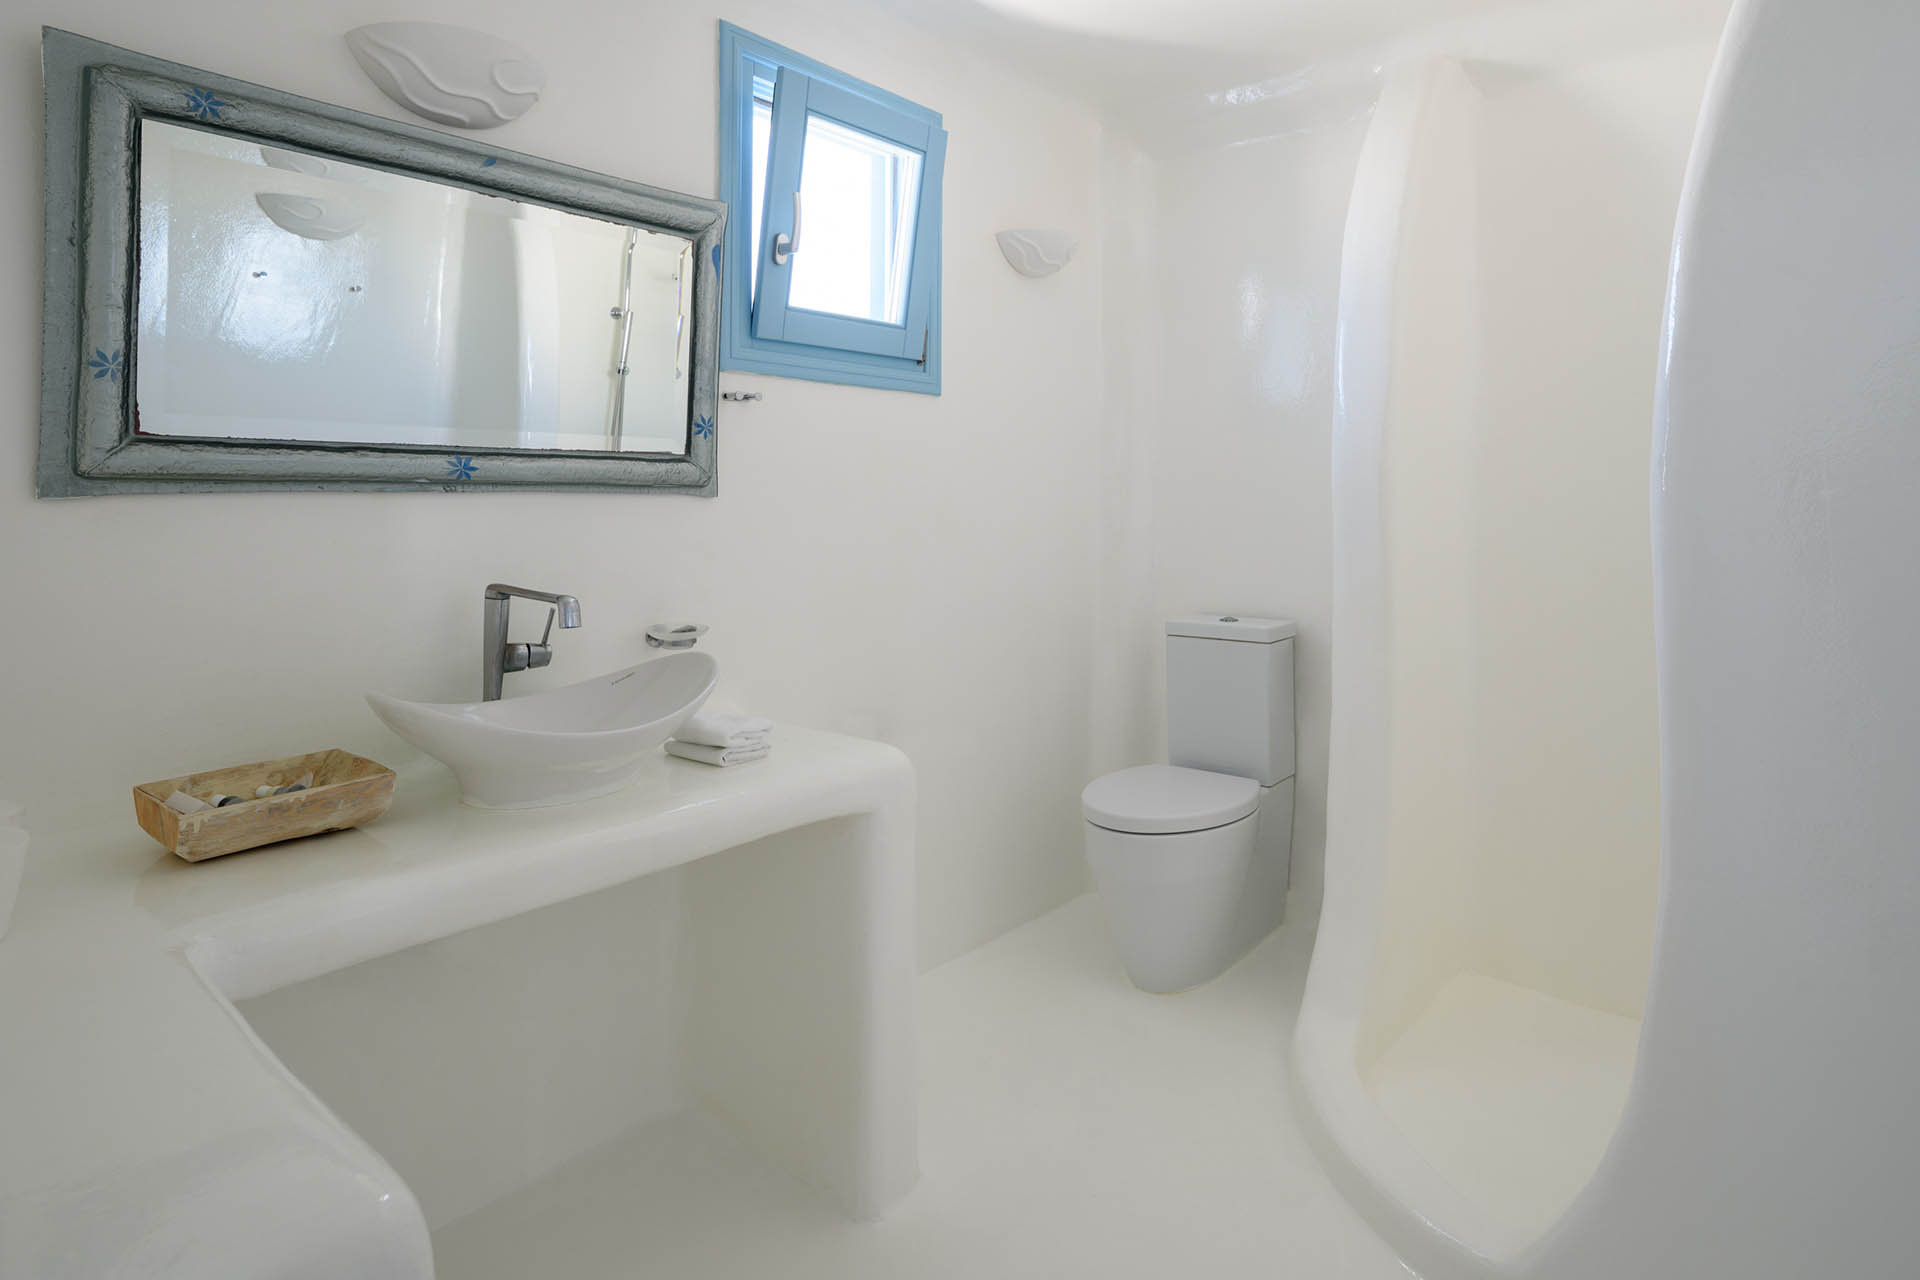 Kalestesia Suites - Bathroom with shower